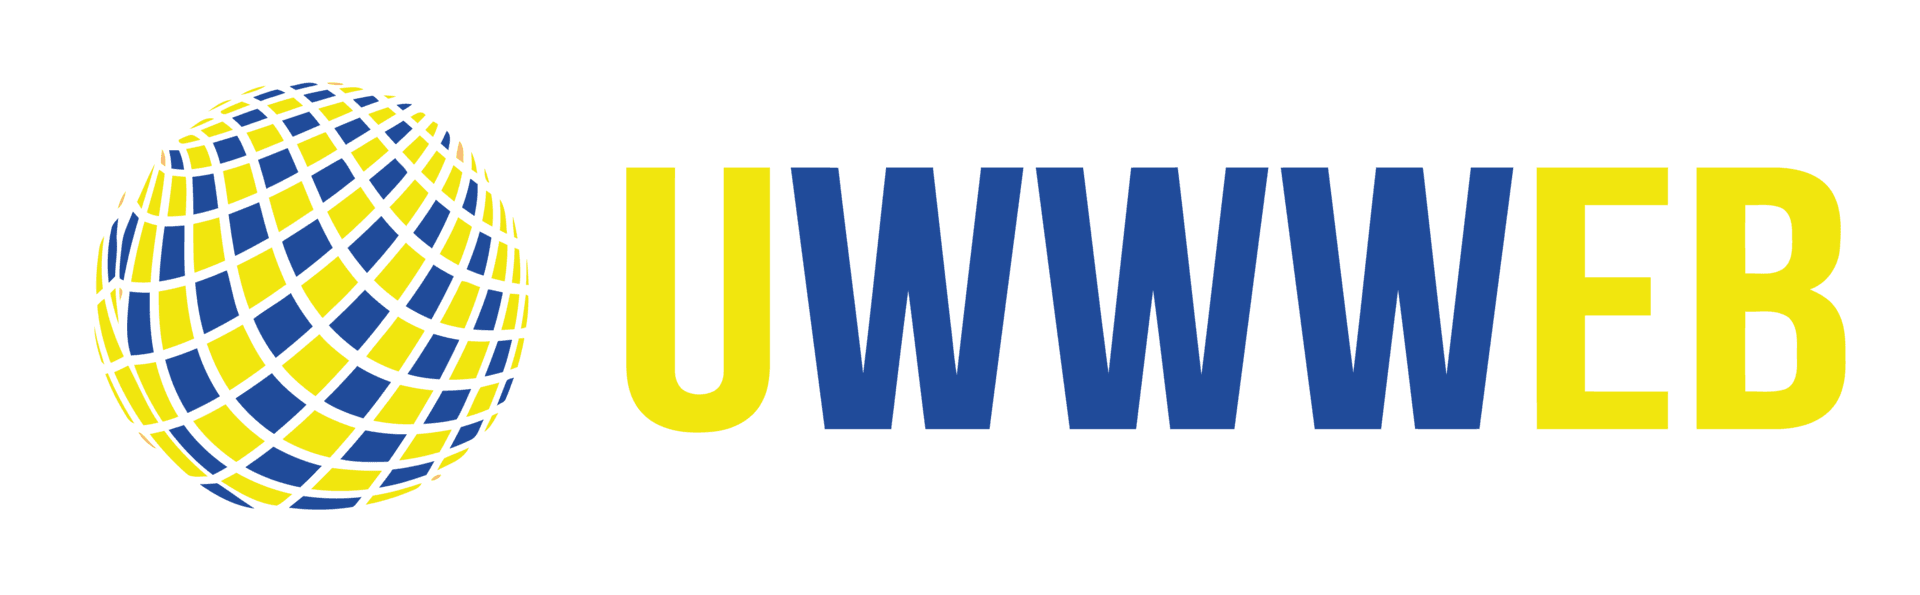 UWW Logo - Welcome to u